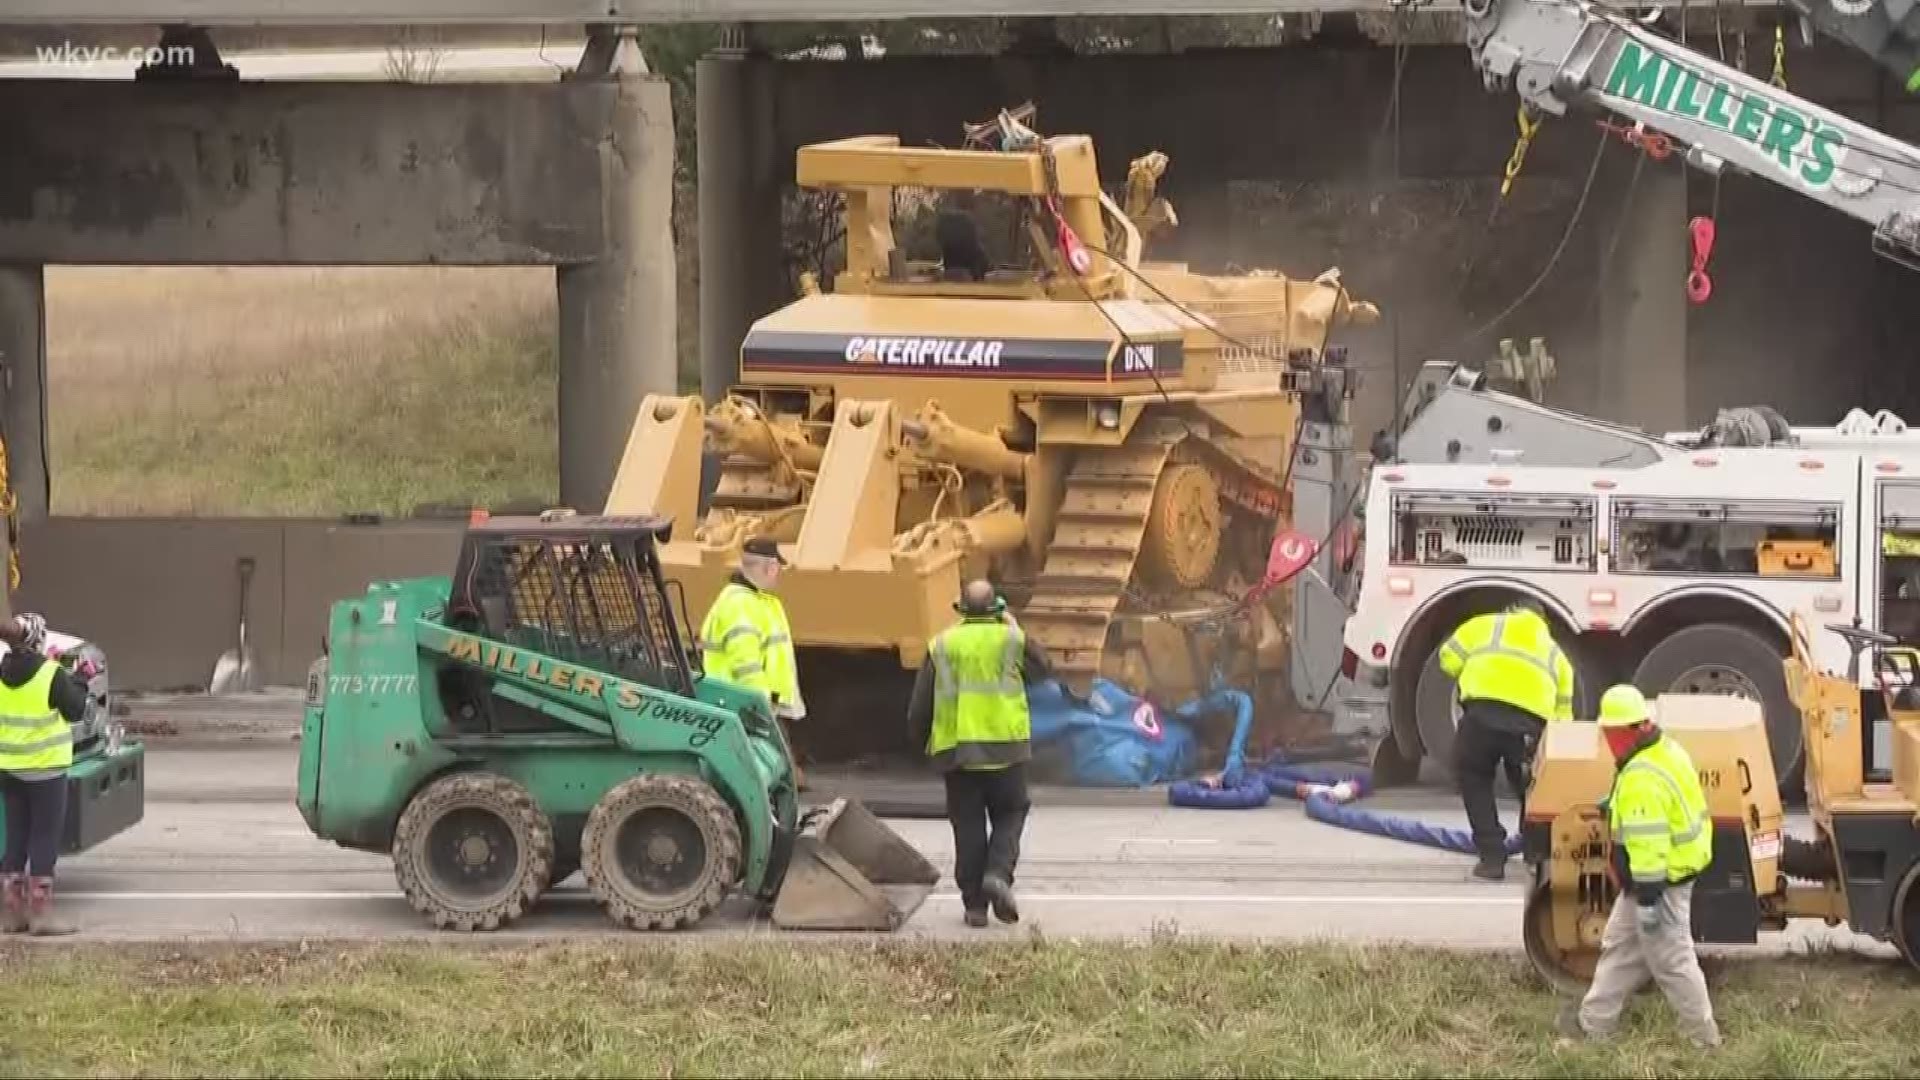 Bridge repairs to close Akron roads